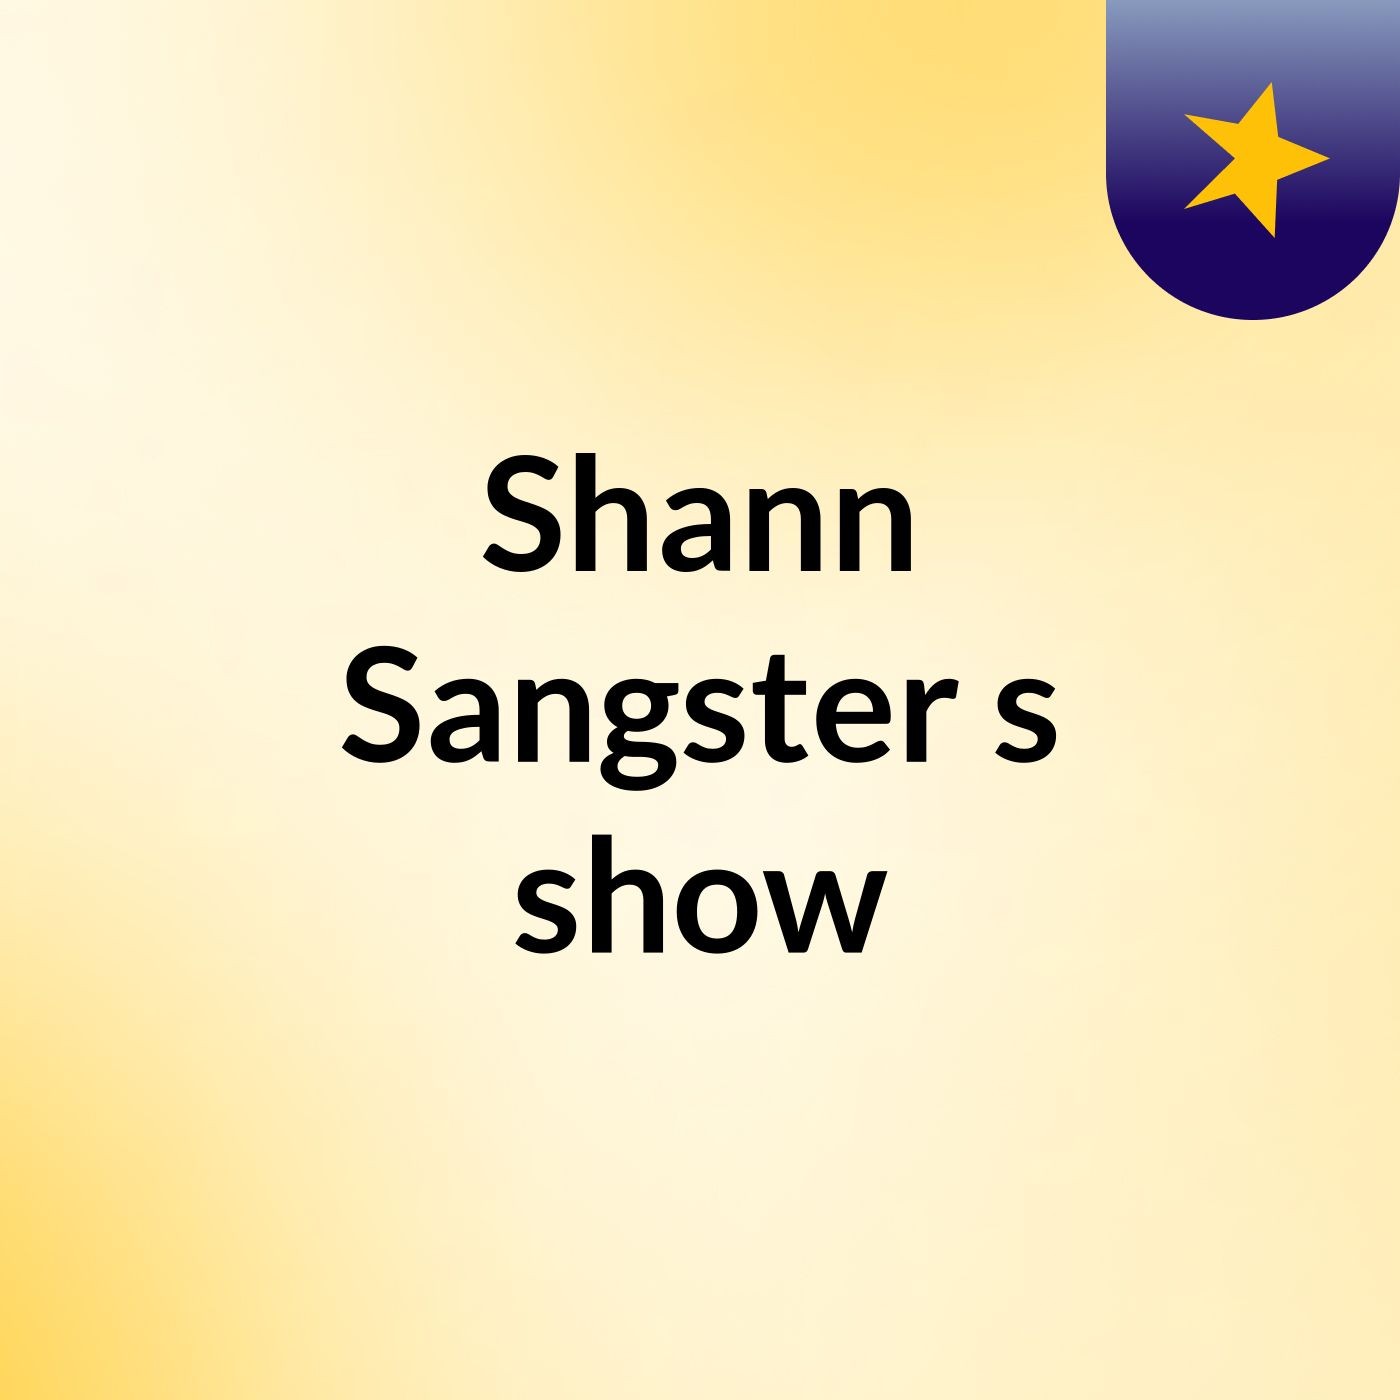 Episode 3 - Shann Sangster's show